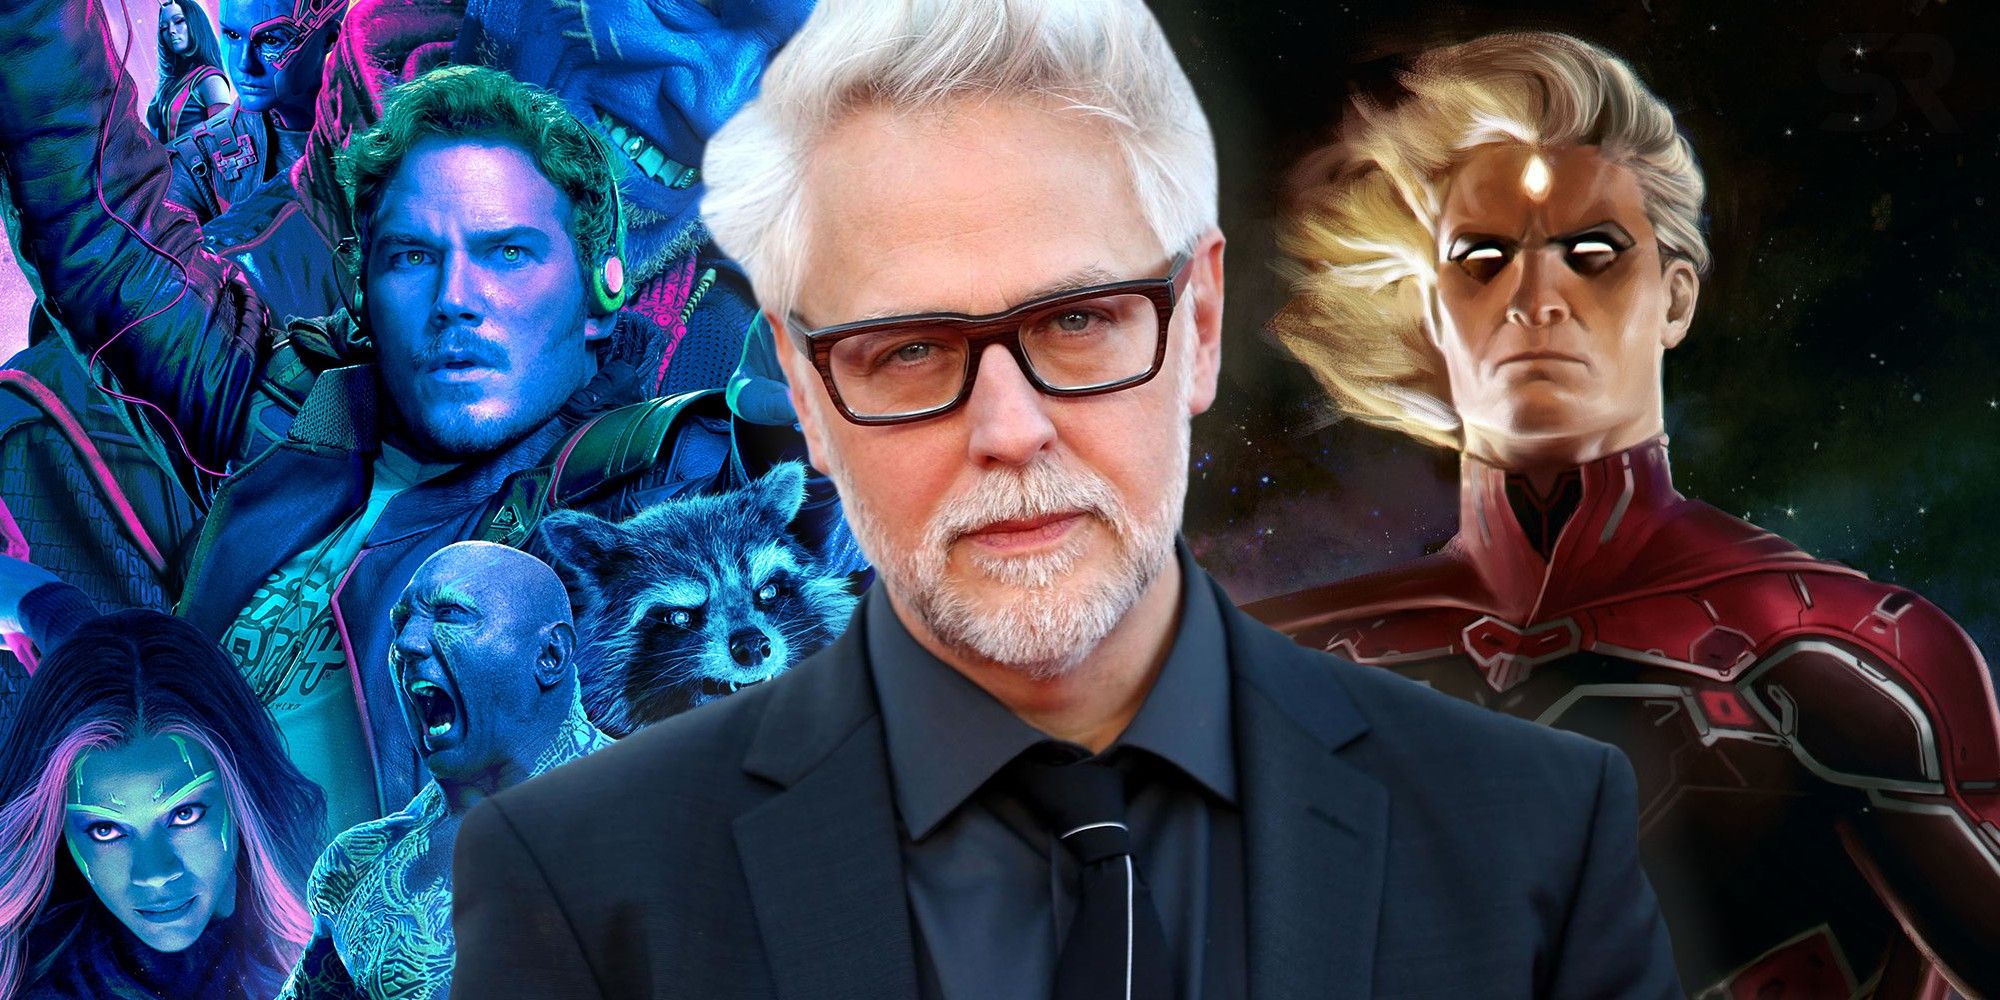 Guardians of the Galaxy 3 Review: James Gunn Beats Marvel's Formula Problem